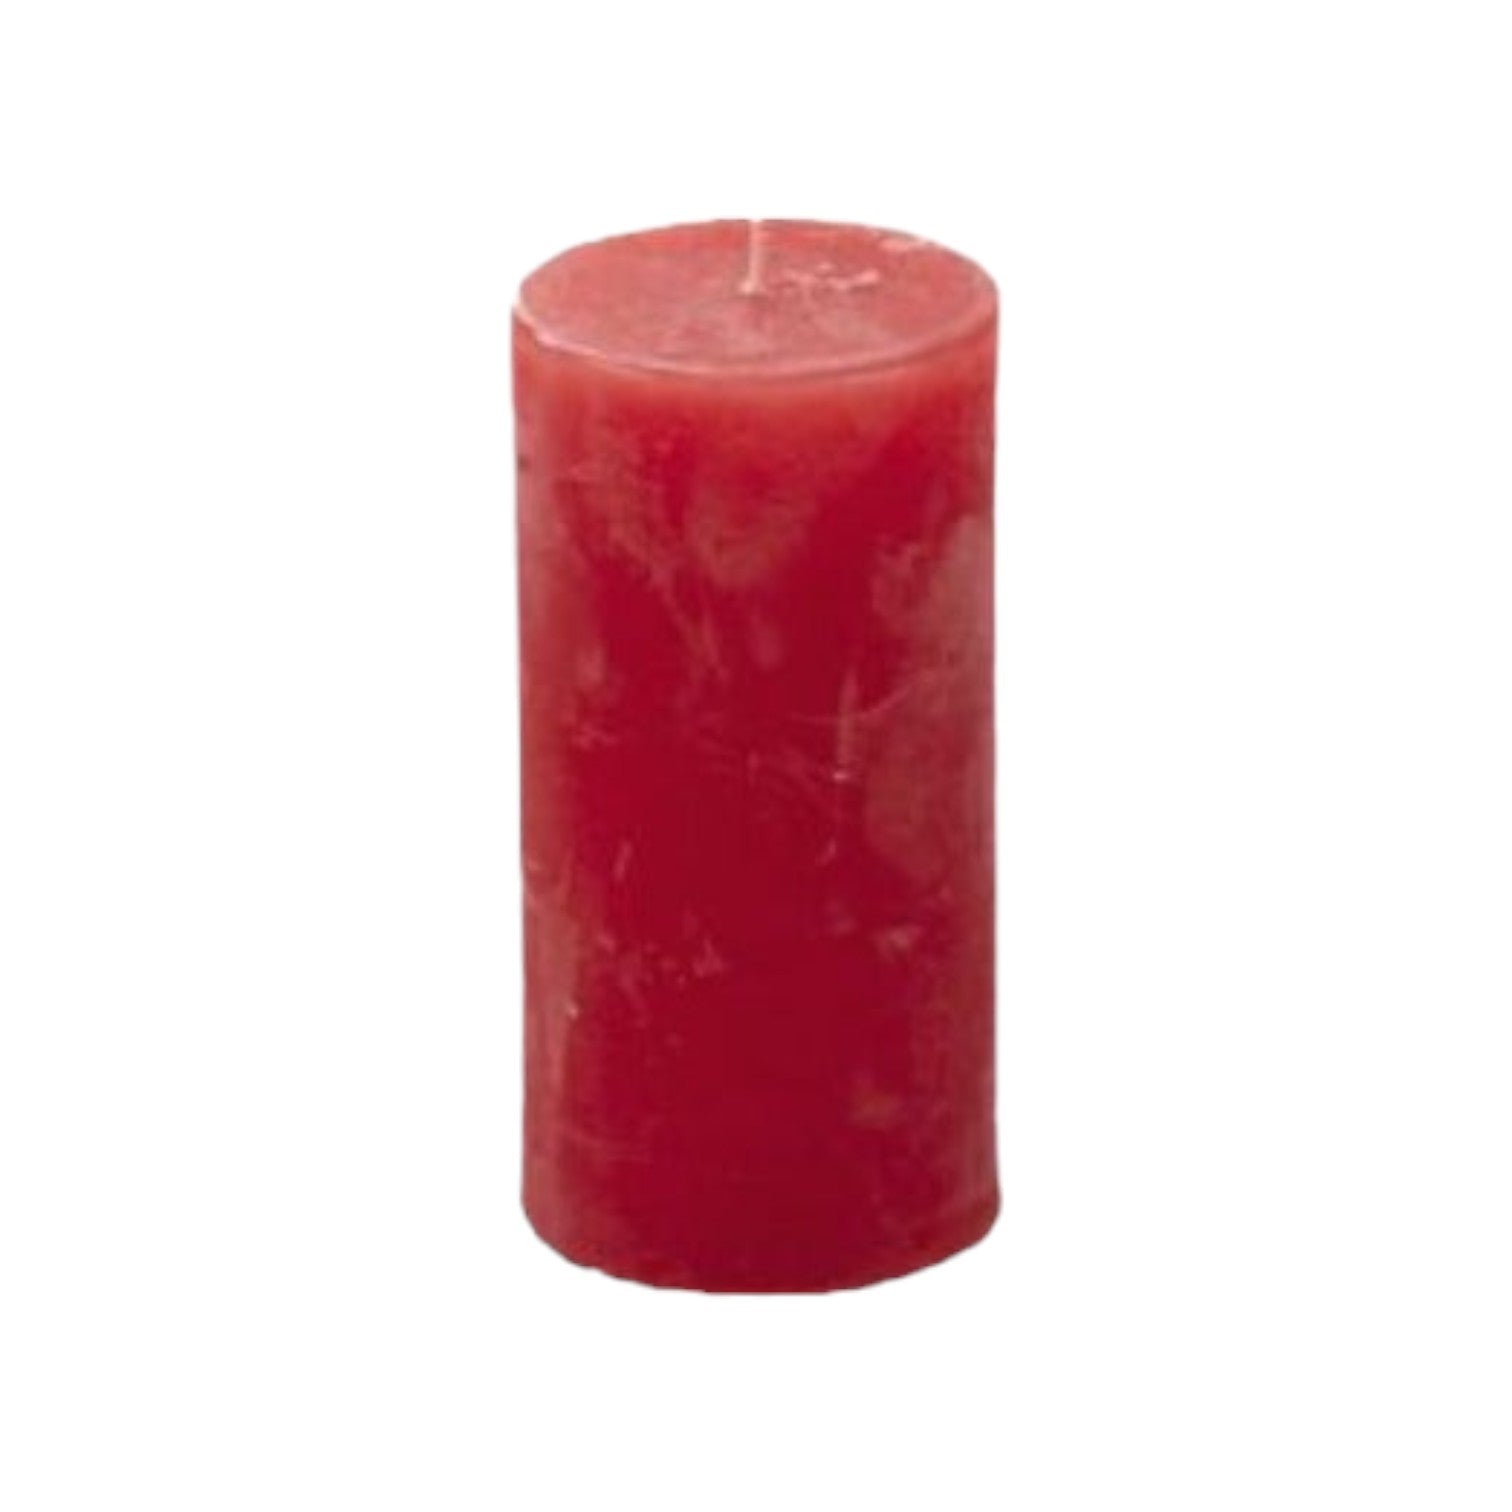 Branded By - Kaarsen 'Pillar' (Ø5cm x 10cm) - Post Red (set van 9)